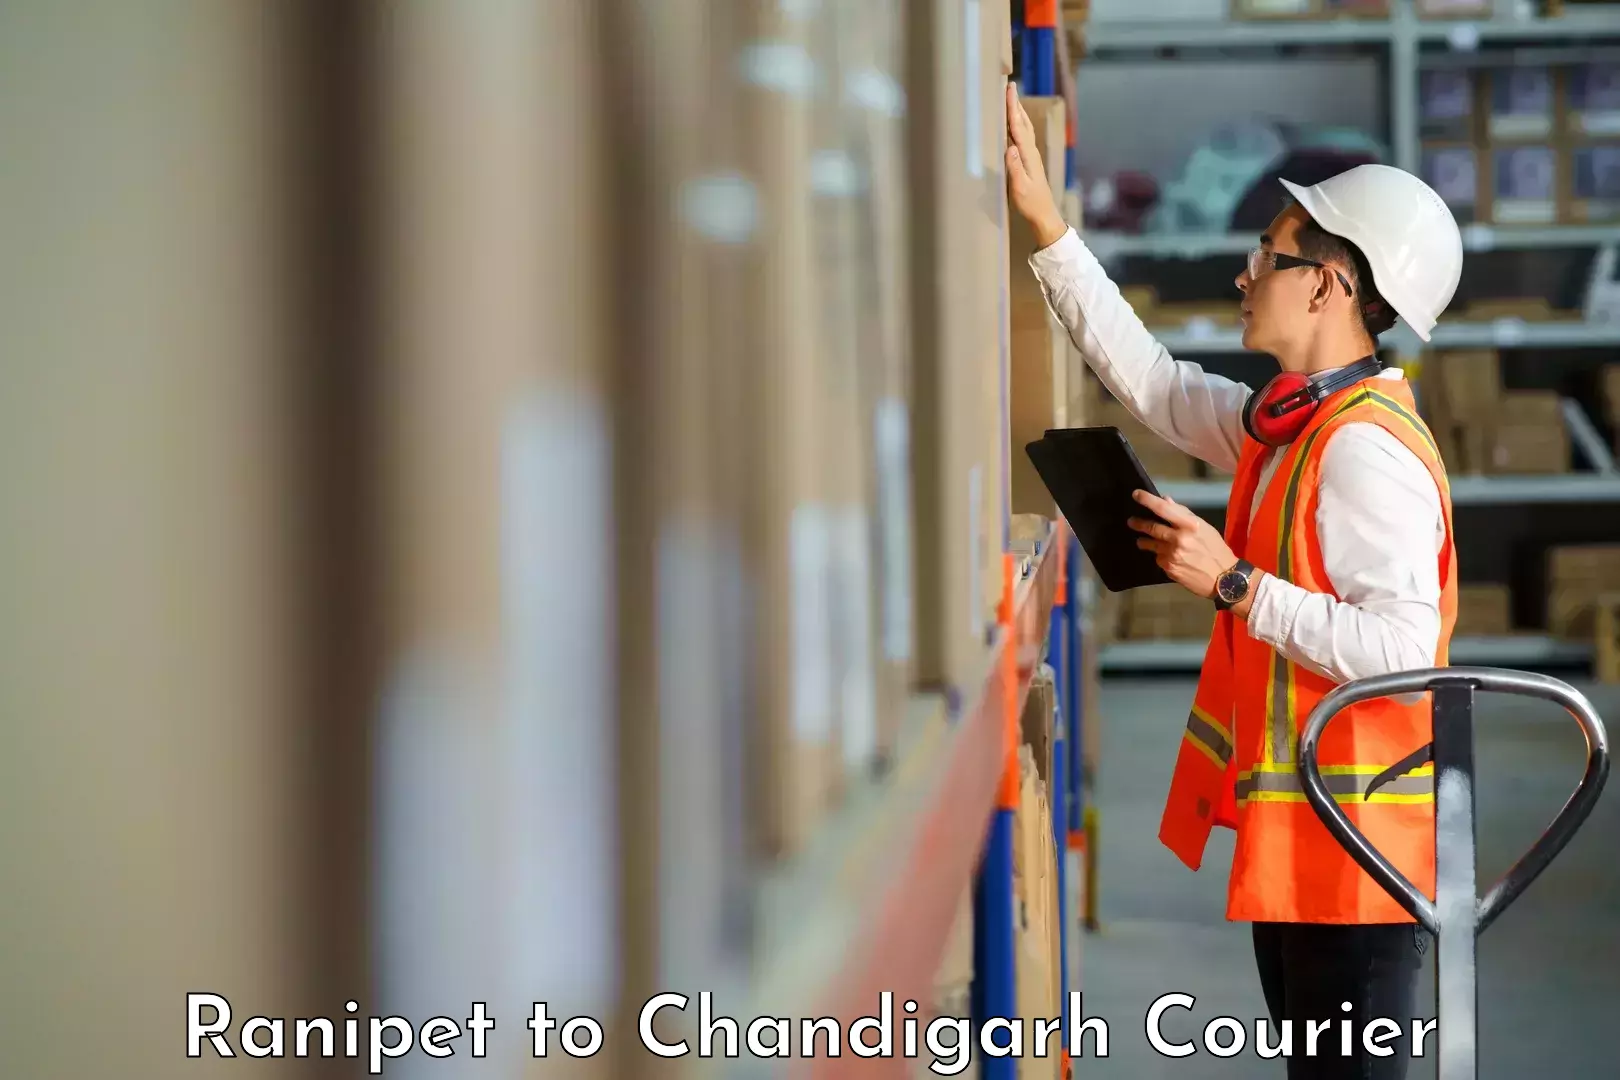 Logistics service provider Ranipet to Chandigarh